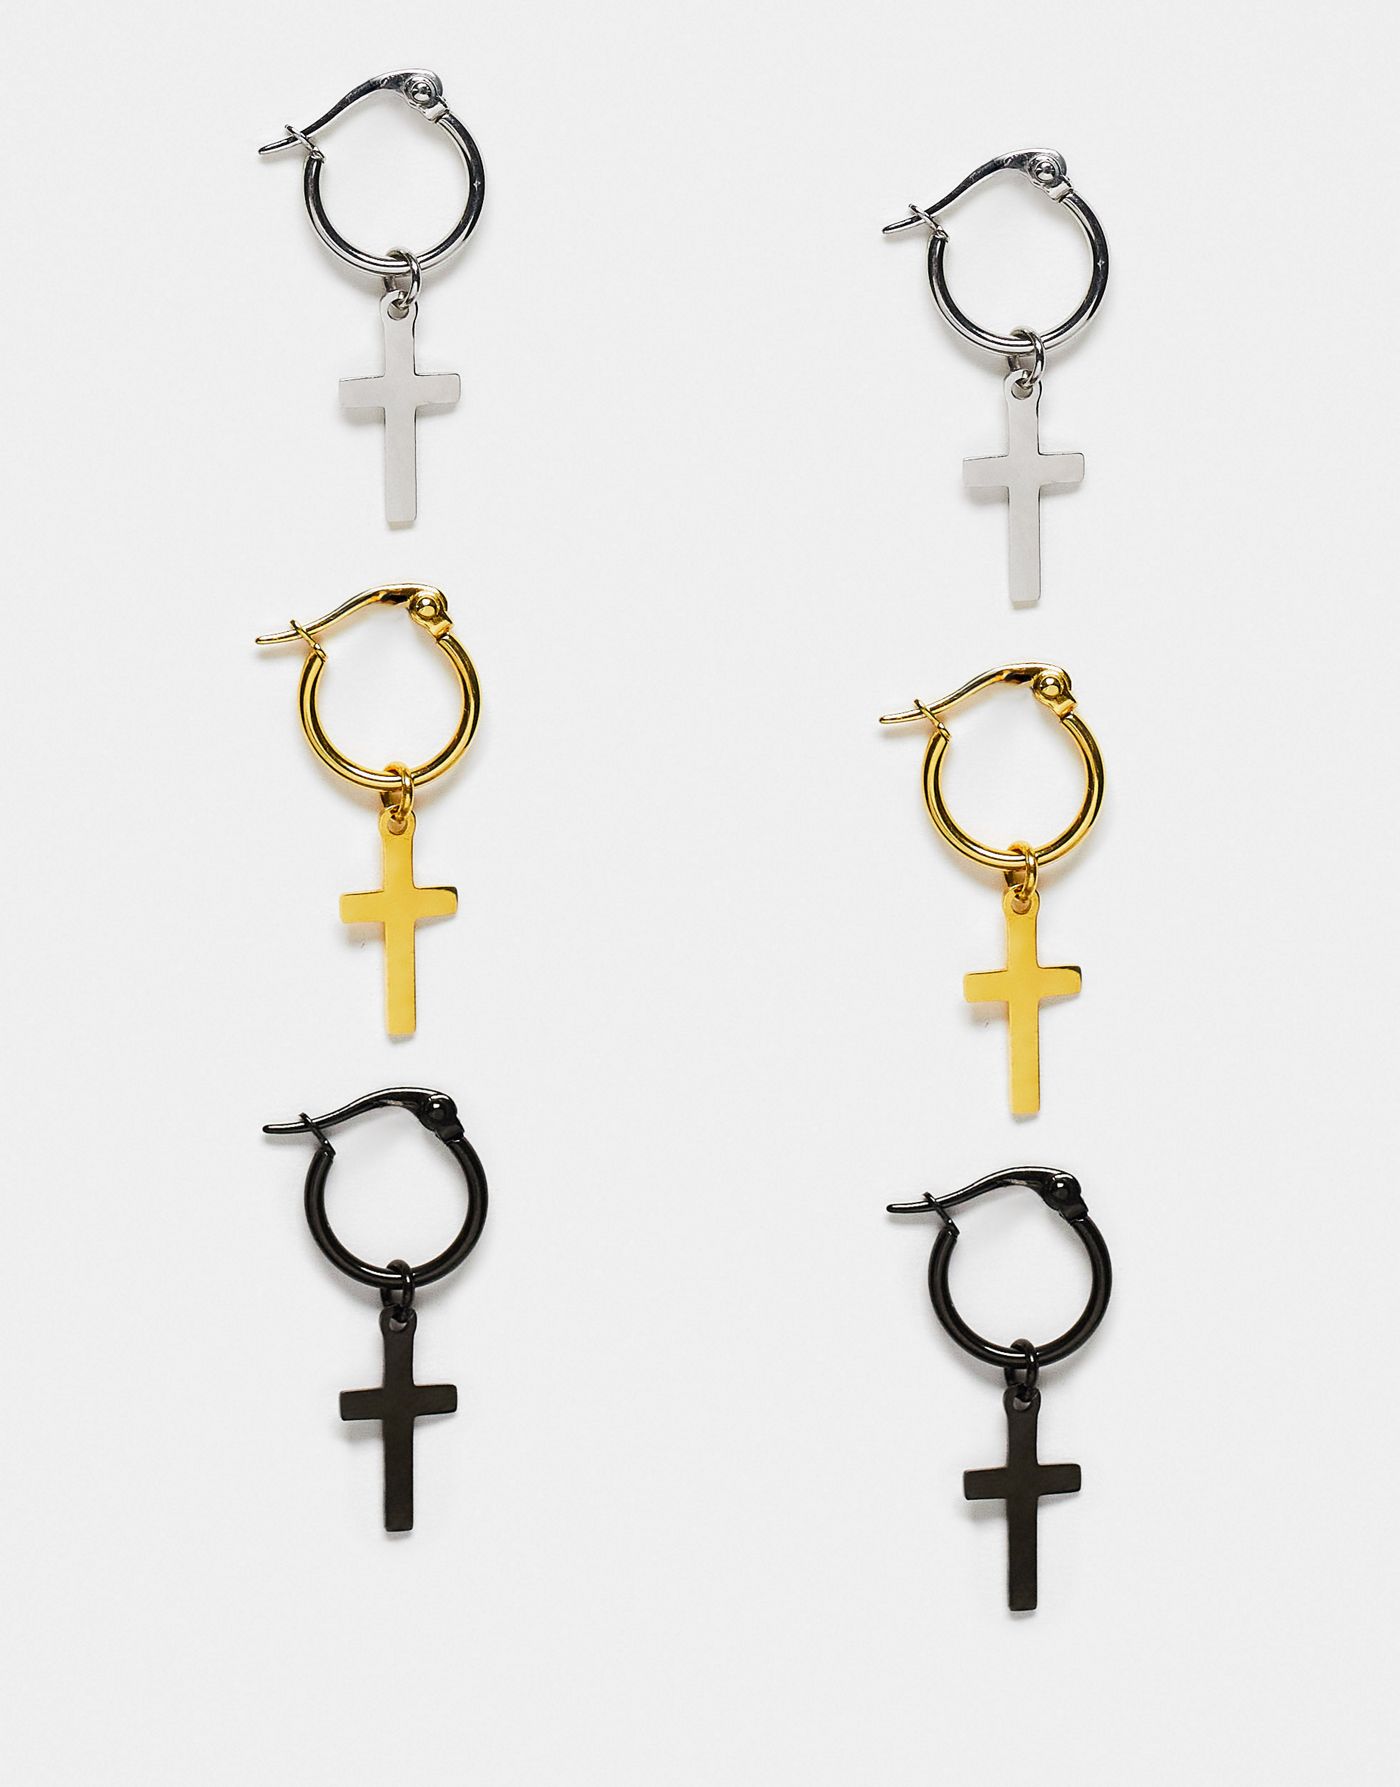 ASOS DESIGN 3 pack waterproof stainless steel hoop earrings set with cross pendant in silver gold and matte black